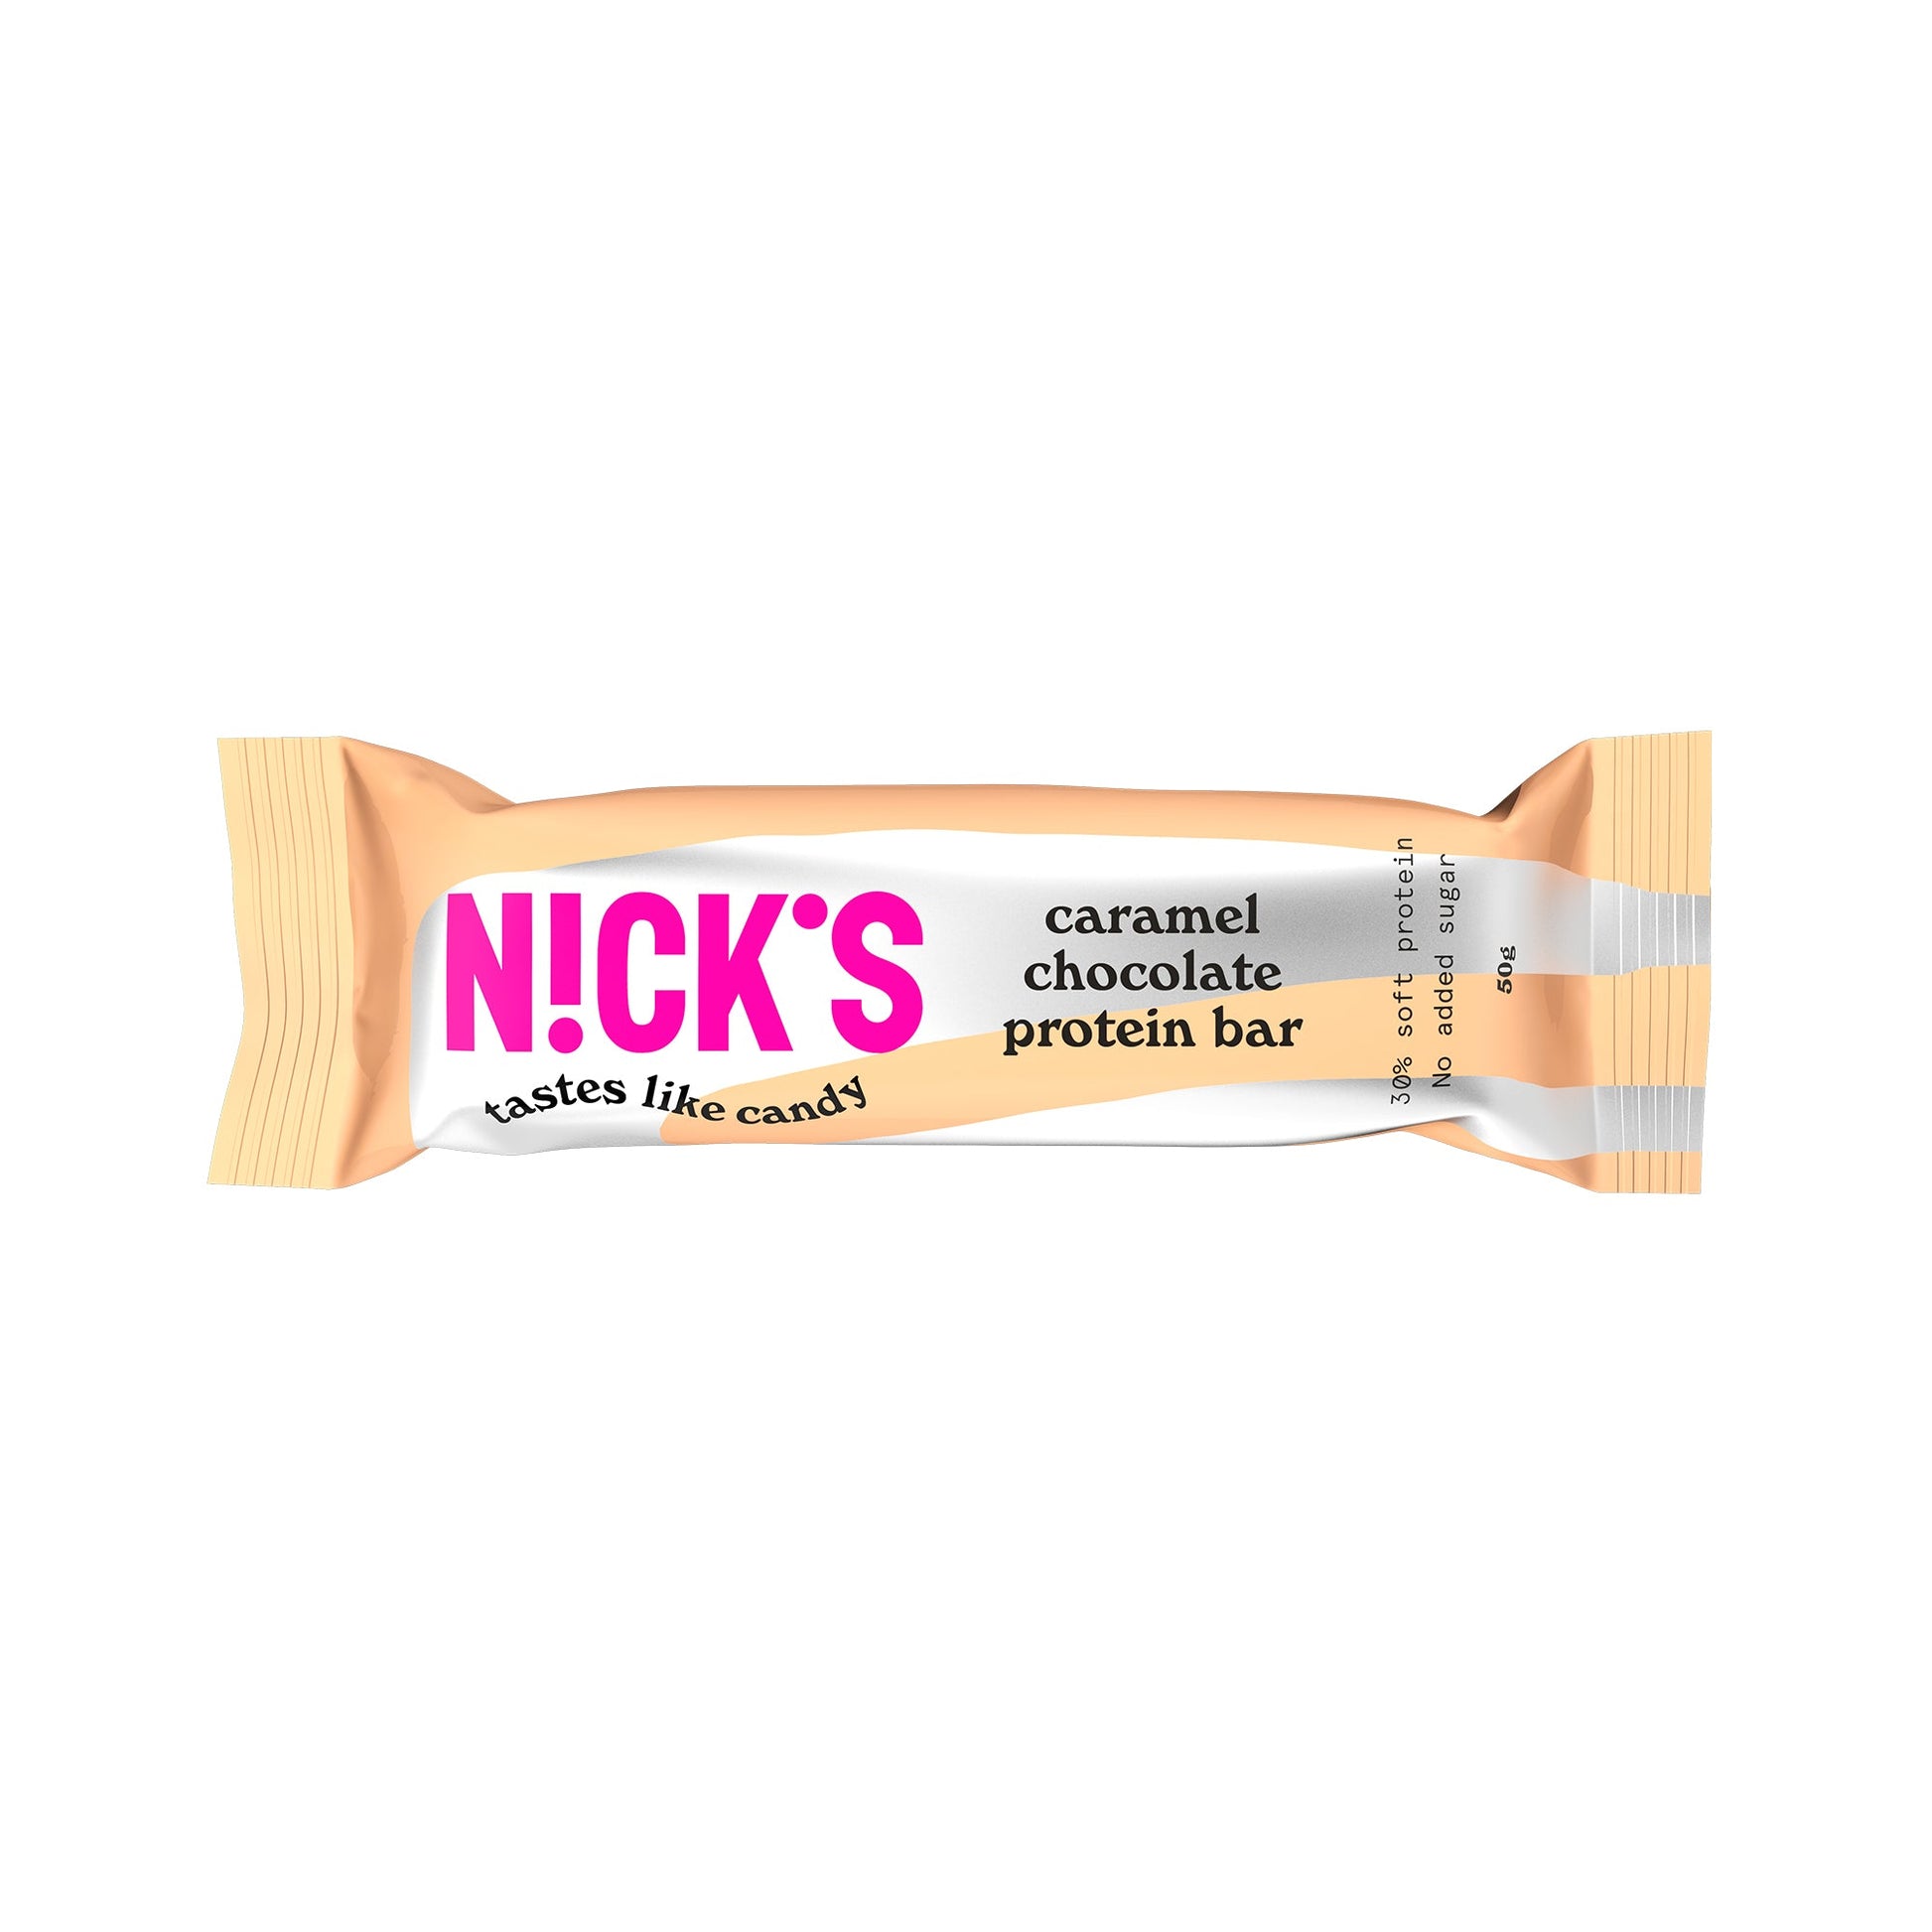 NICK'S-Proteiinibatoon "caramel chocolate" 50g - njom.ee